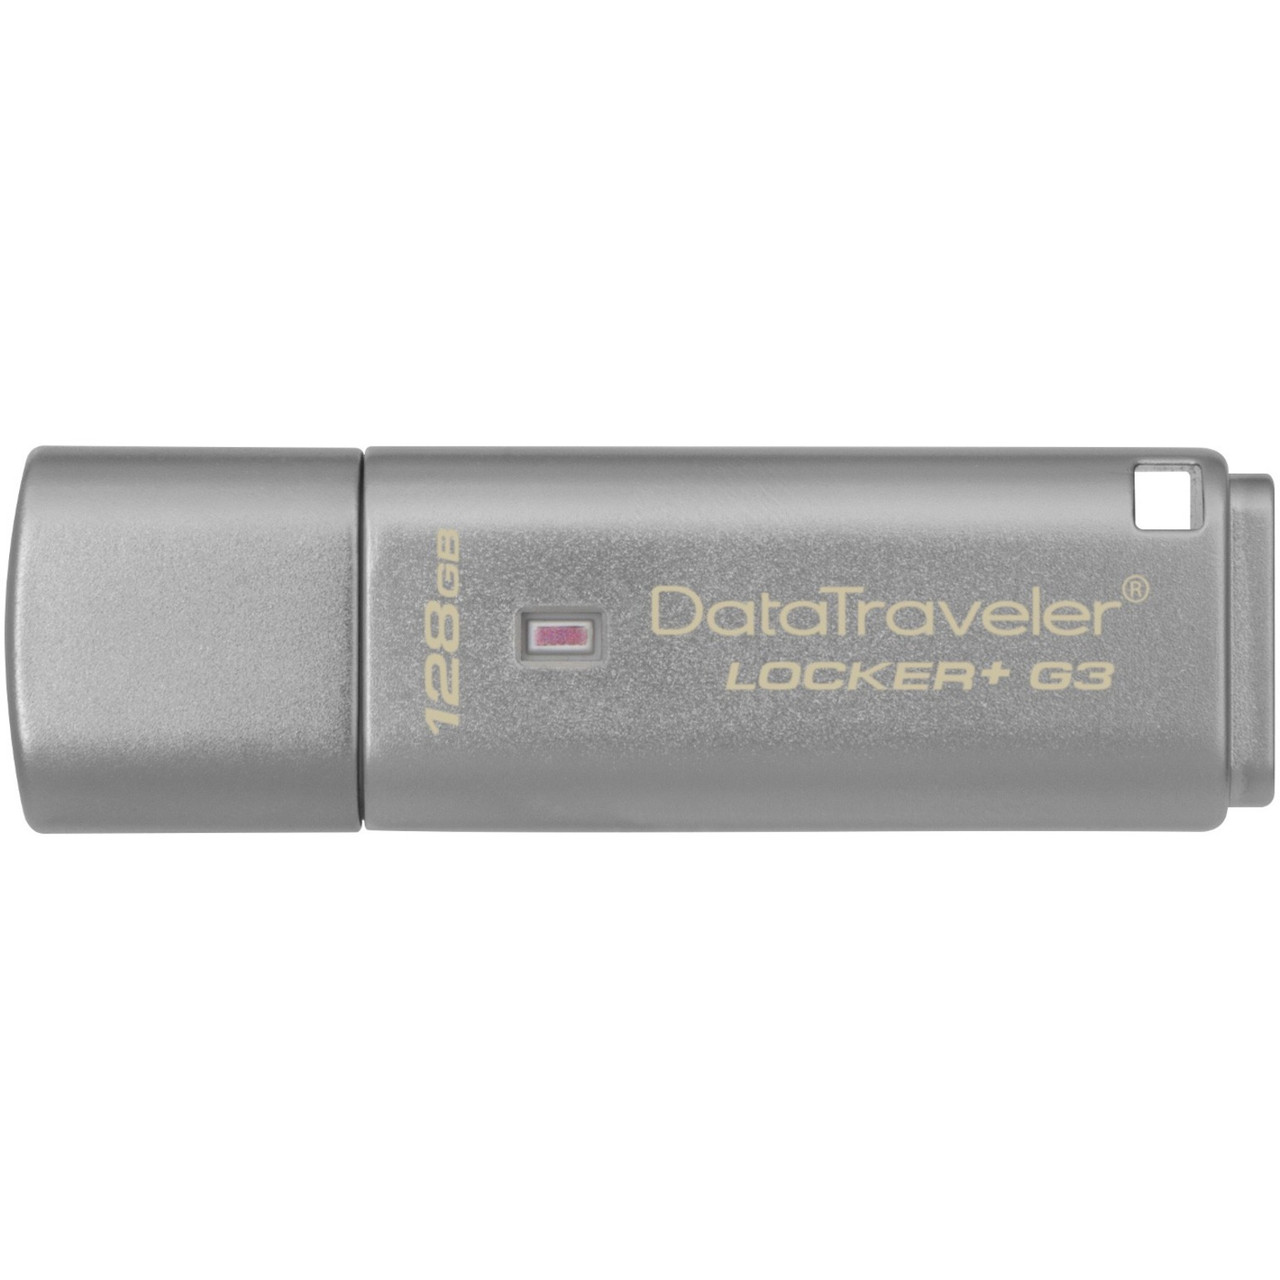 Kingston DataTraveler Locker+ G3 128GB USB 3.0 Type A Flash Drive - DTLPG3/128GB